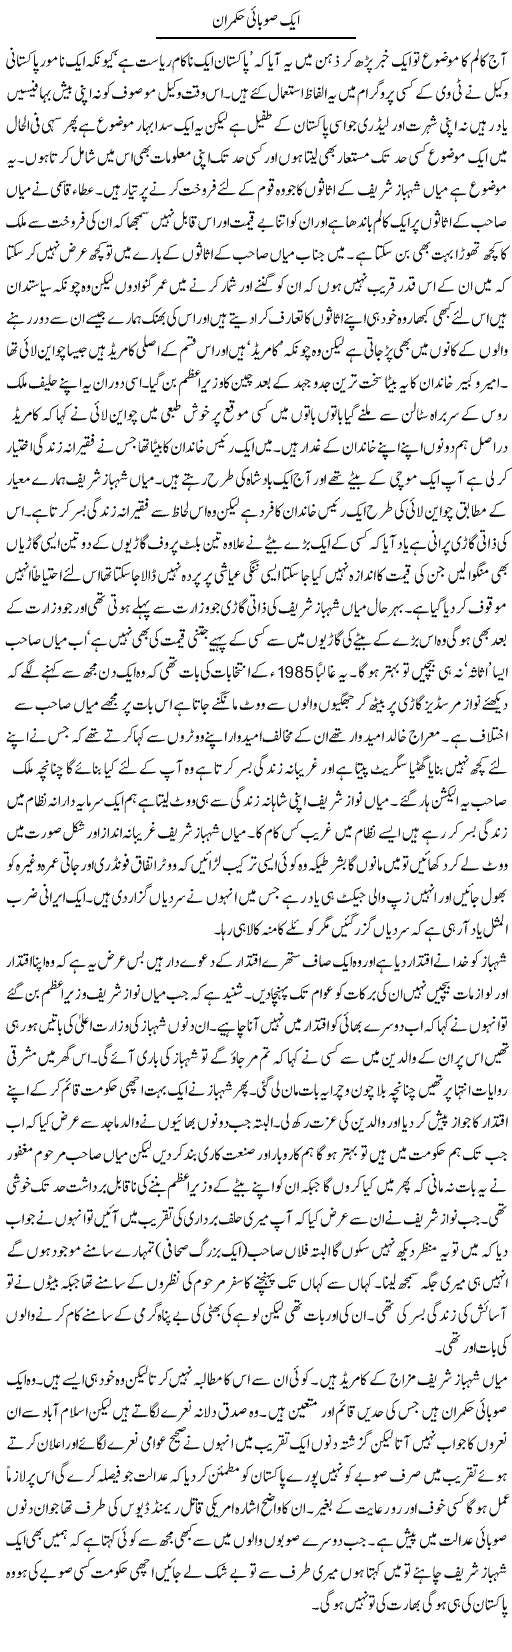 Mr Shahbaz Sharif Express Column Abdul Qadir 5 March 2011